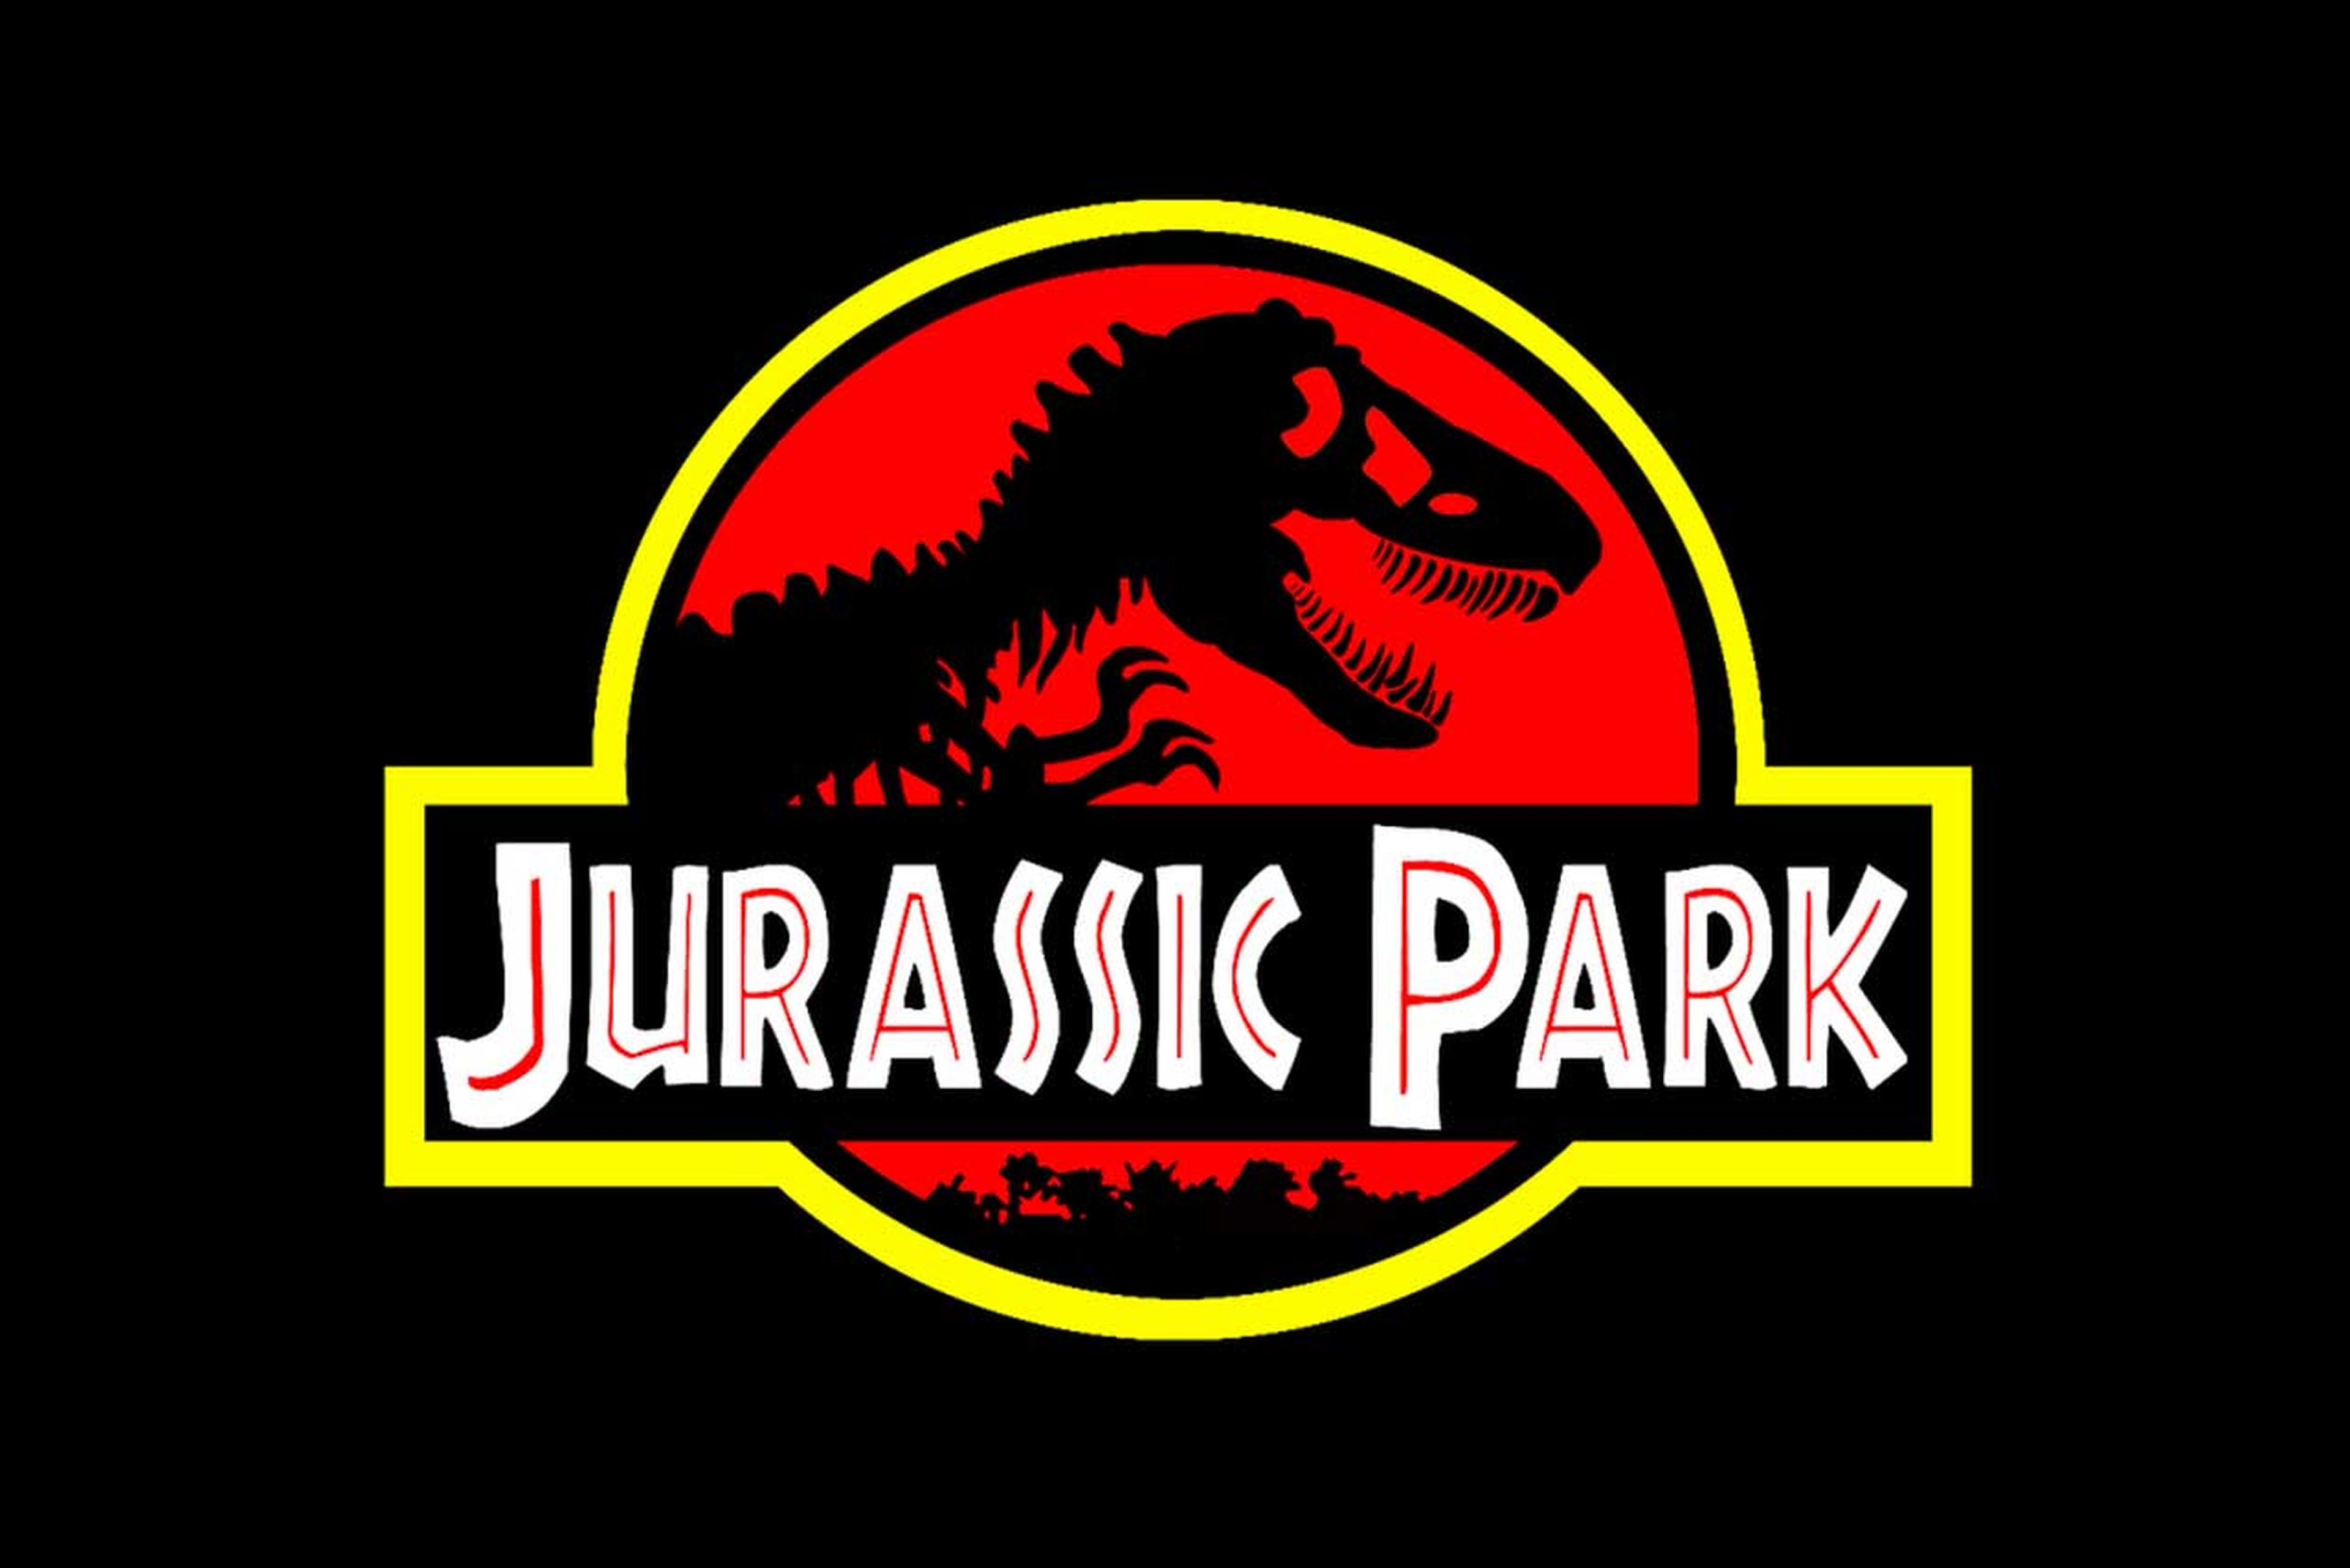 13. Jurassic Park (1993)